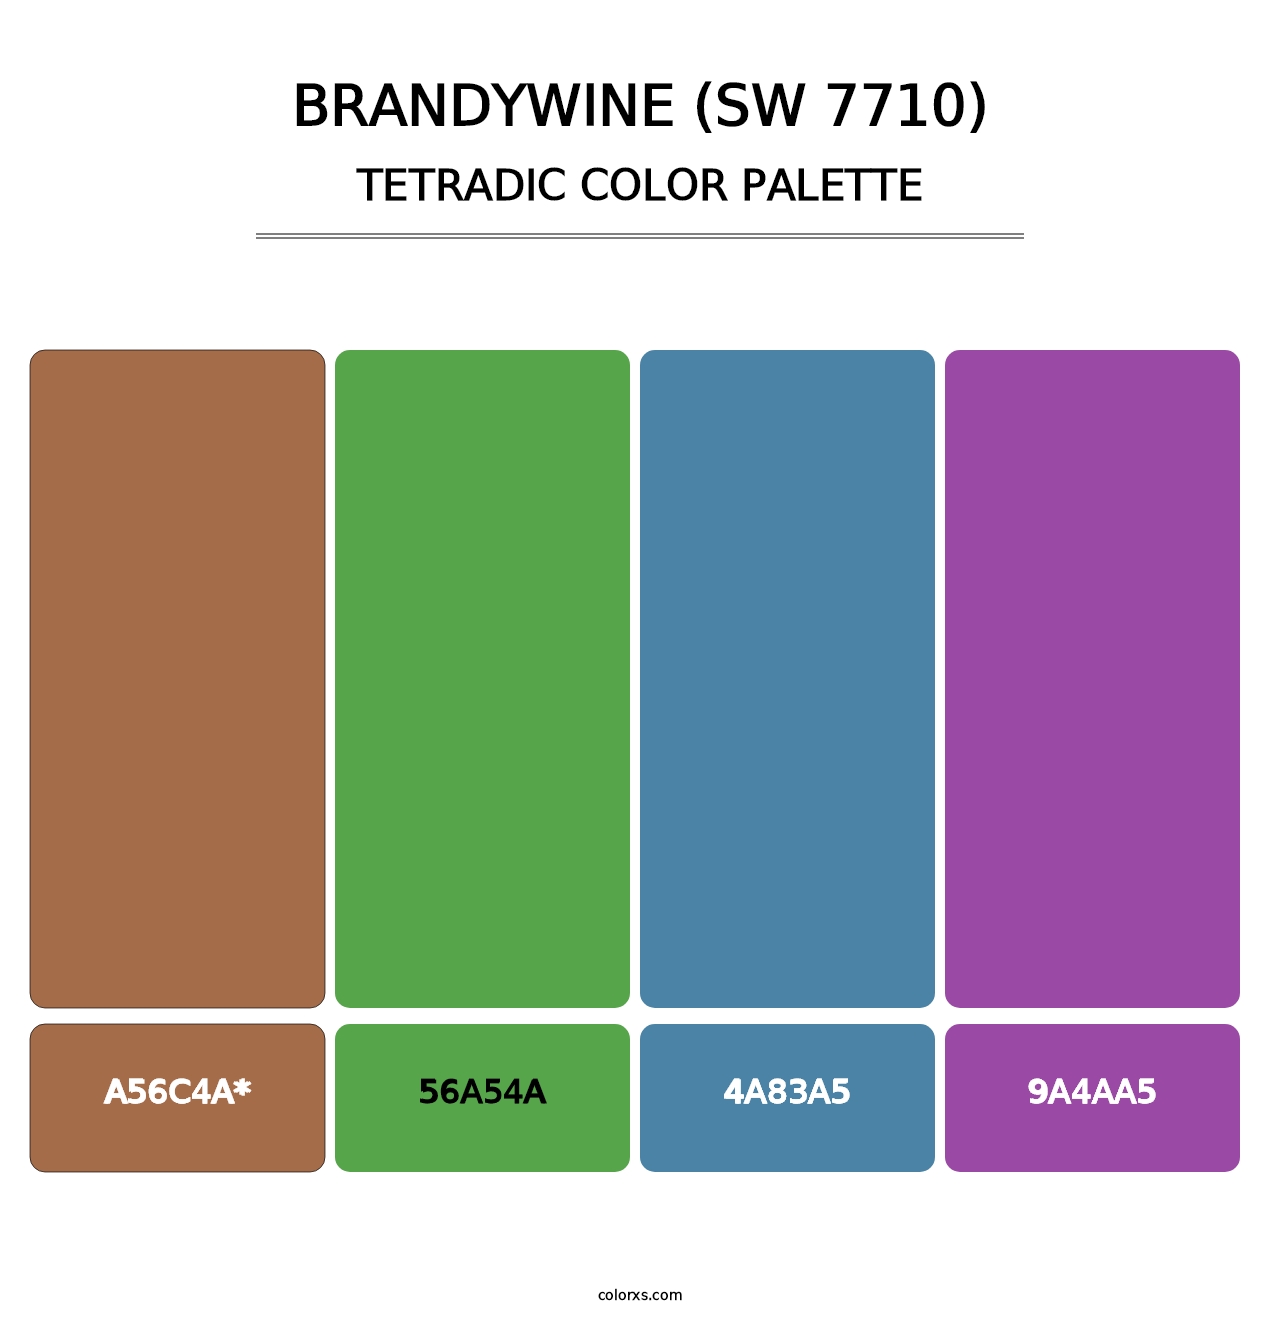 Brandywine (SW 7710) - Tetradic Color Palette